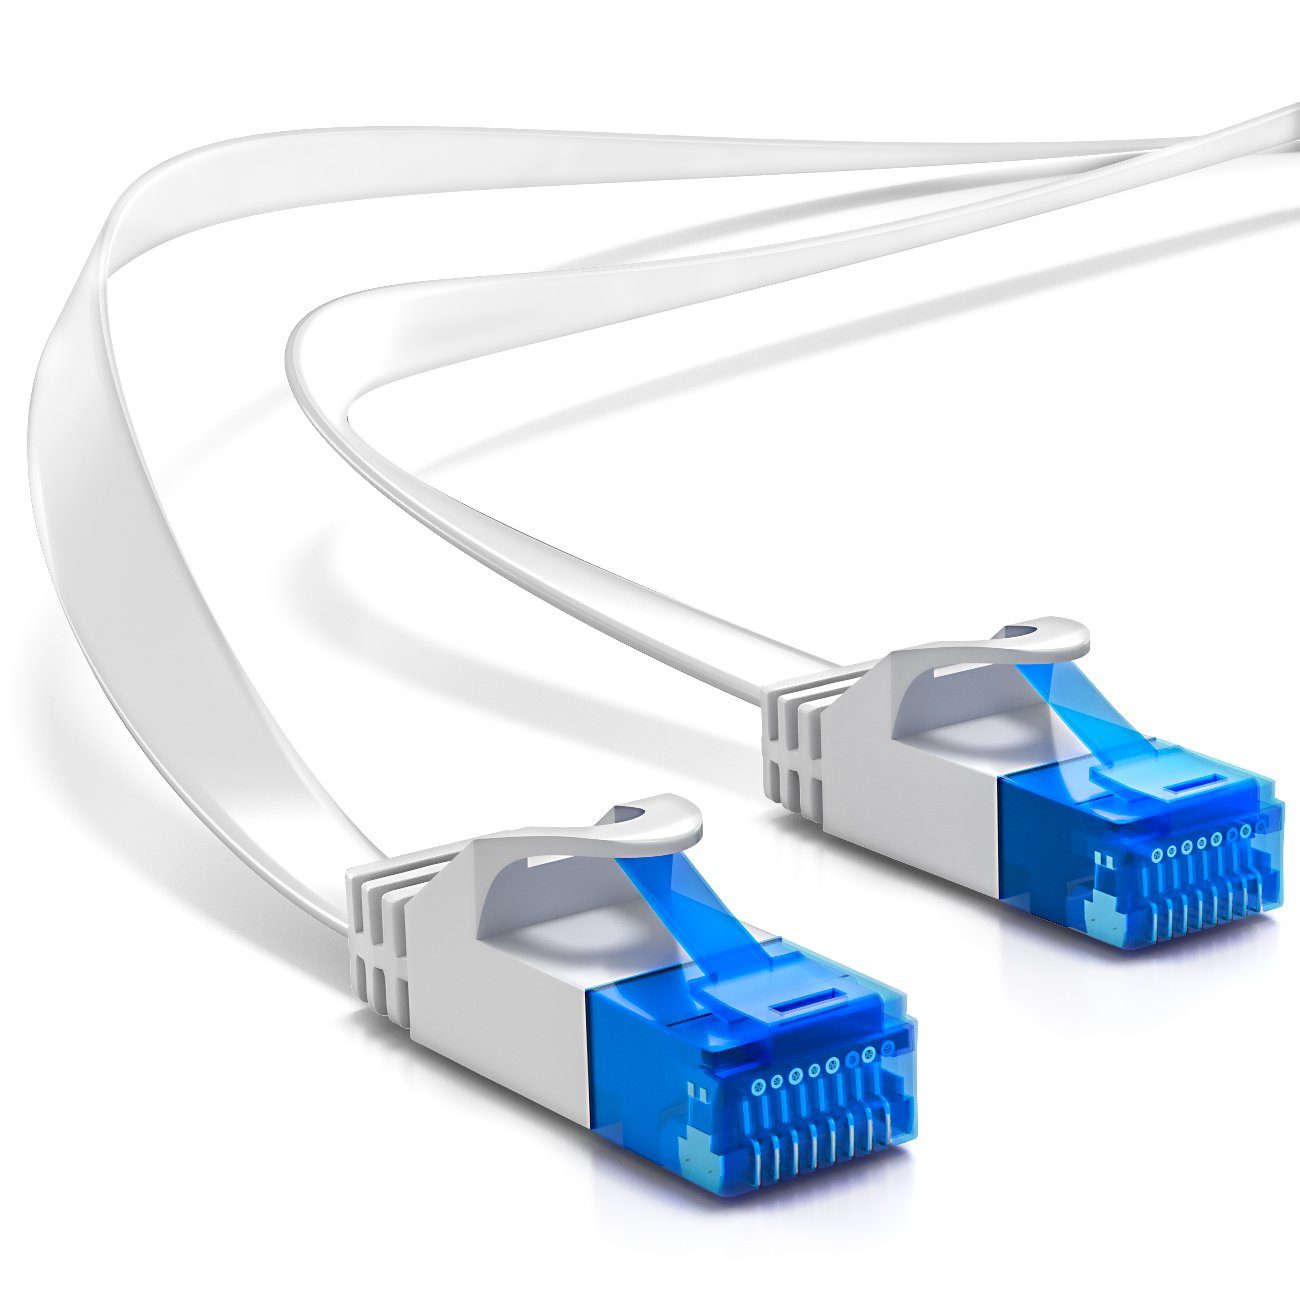 deleyCON deleyCON 1,5m CAT6 flaches Patchkabel Flachkabel Netzwerkkabel LAN LAN-Kabel